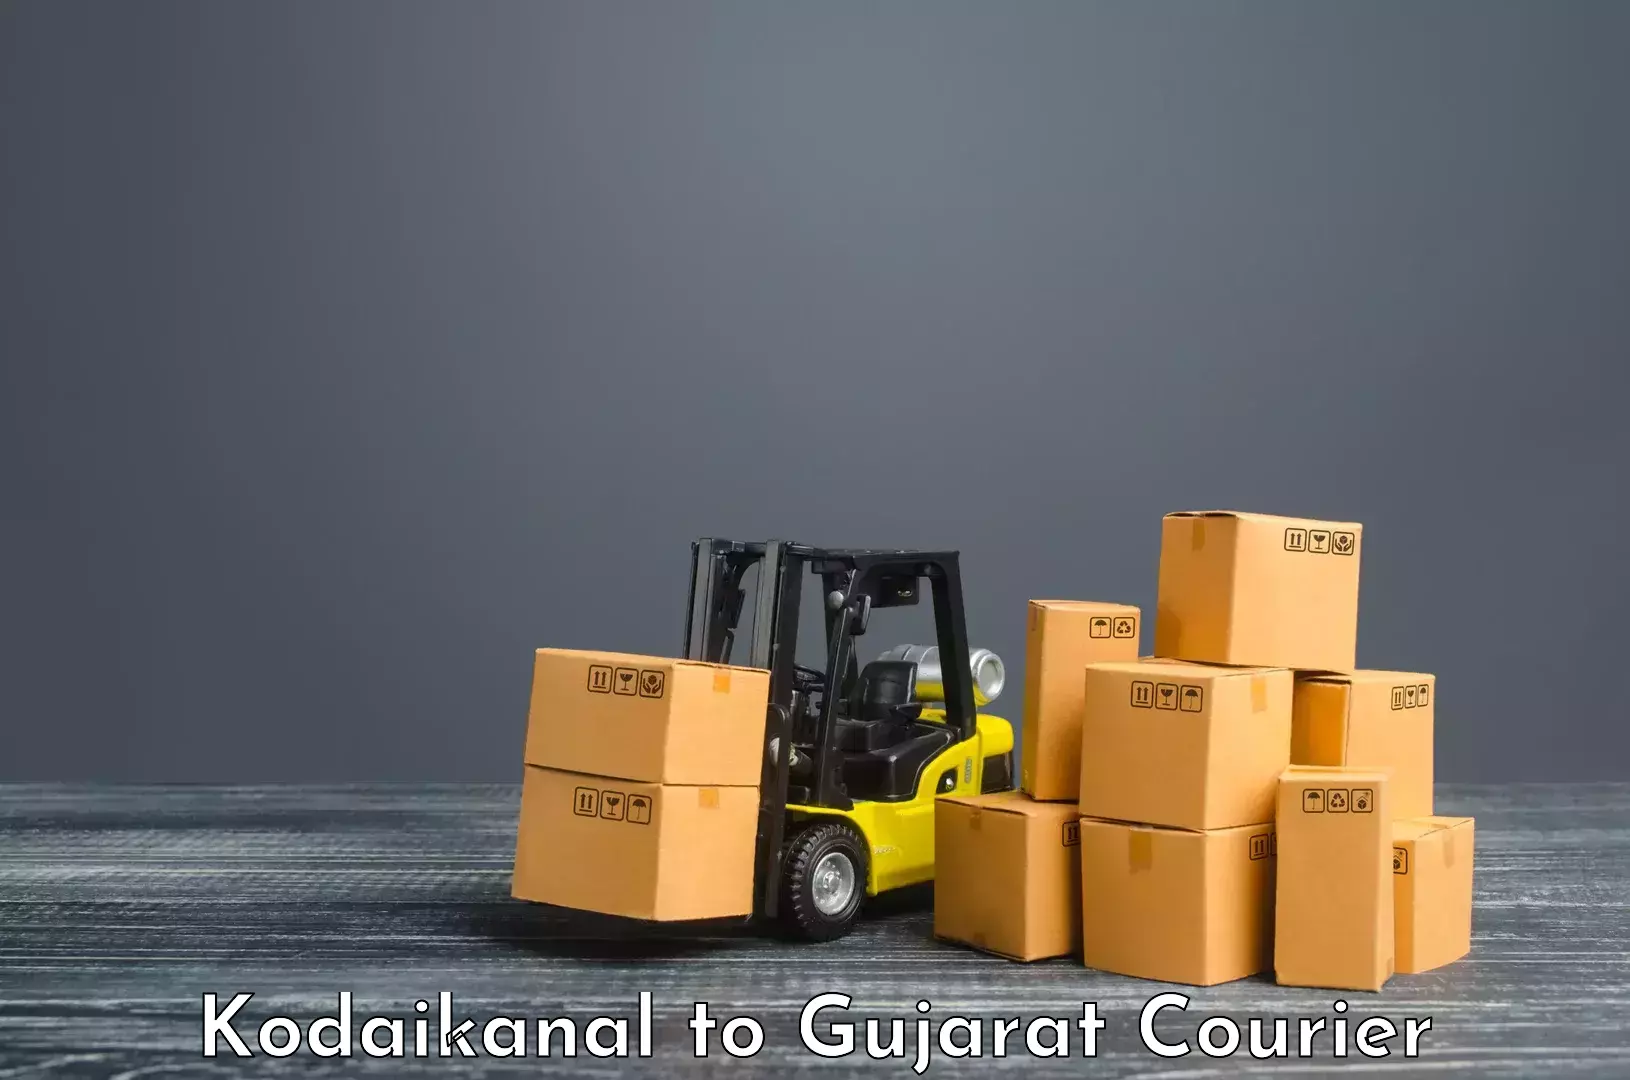 State-of-the-art courier technology Kodaikanal to Porbandar